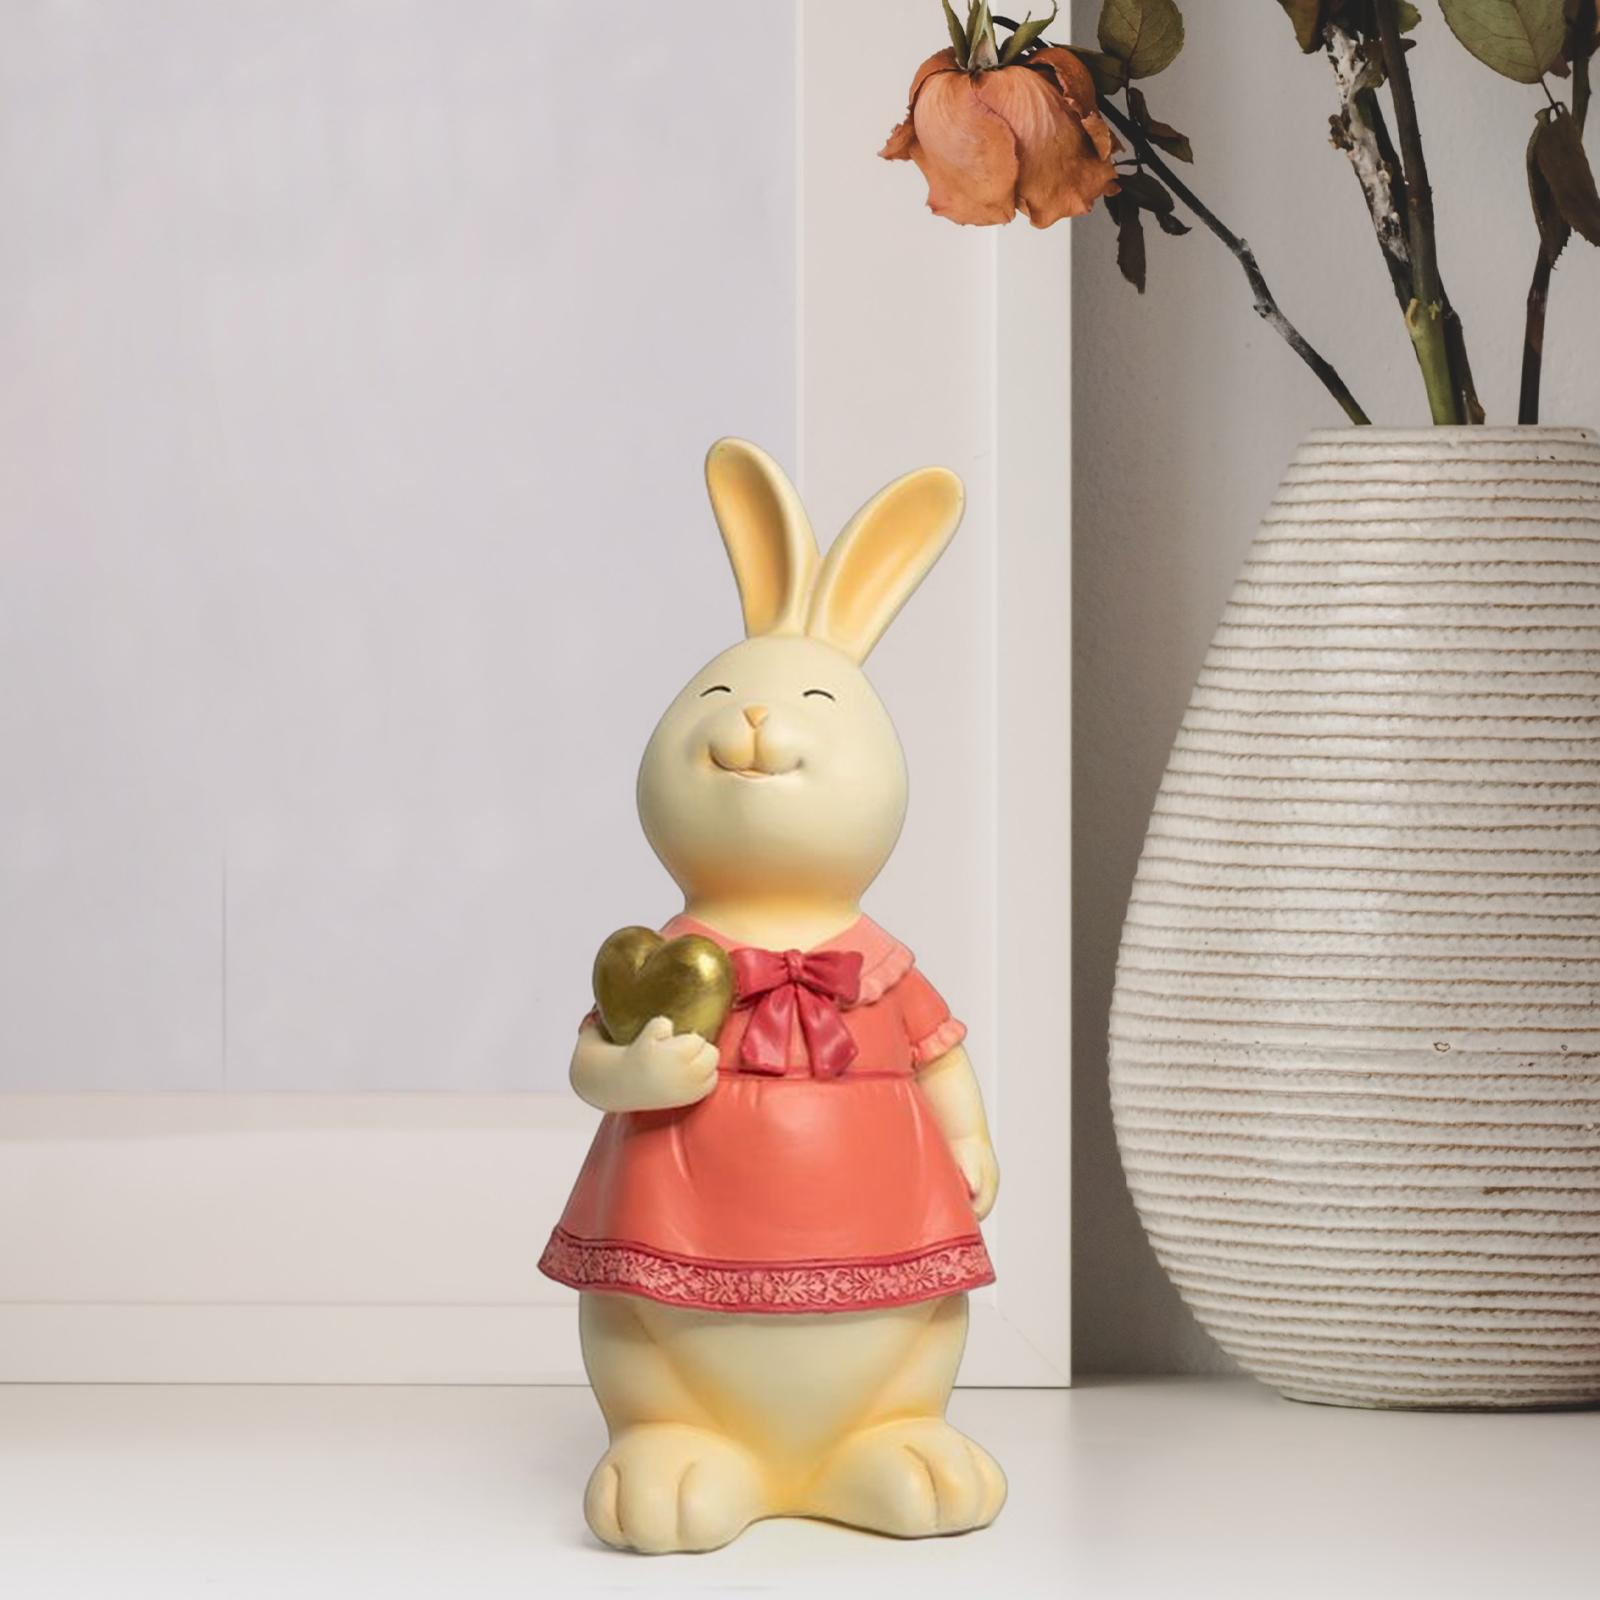 Rabbit Bunny Figurine Crafts Sculpture Gift Decorative Cabinet Lawn Style E